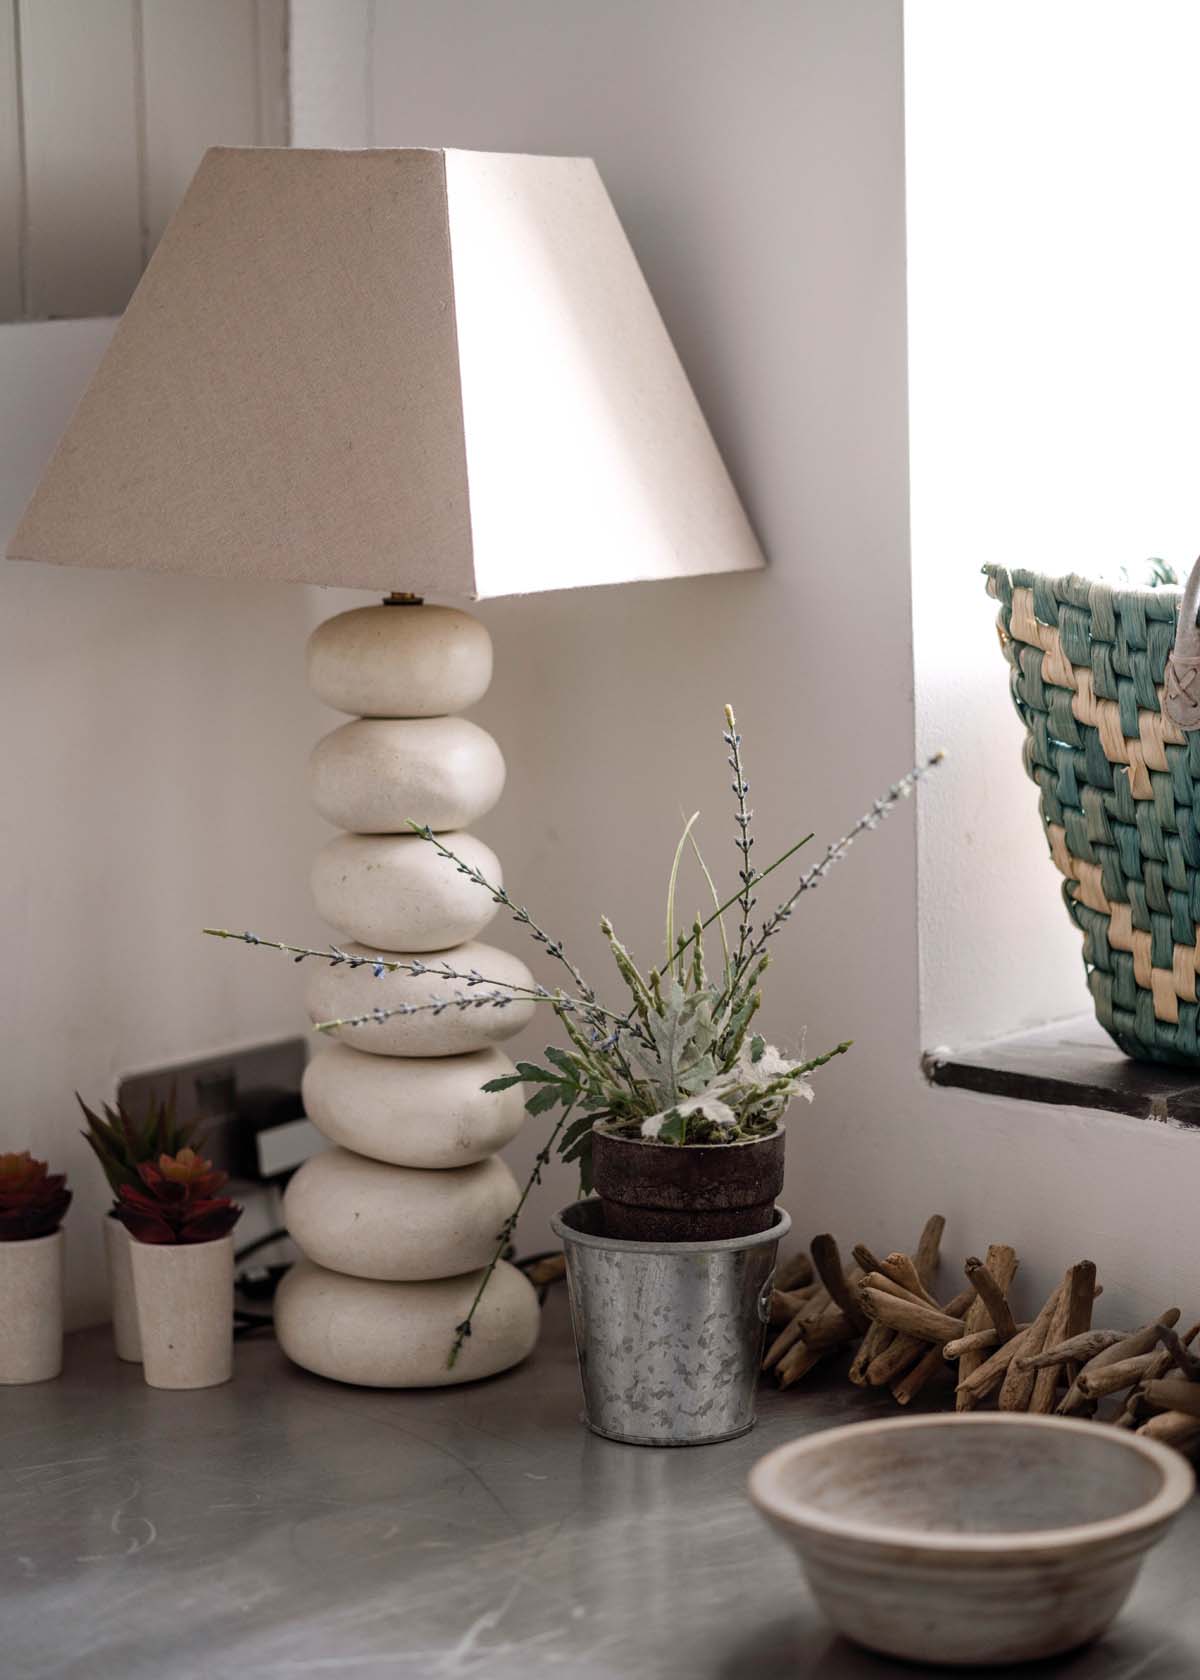 A pebble decorative lamp